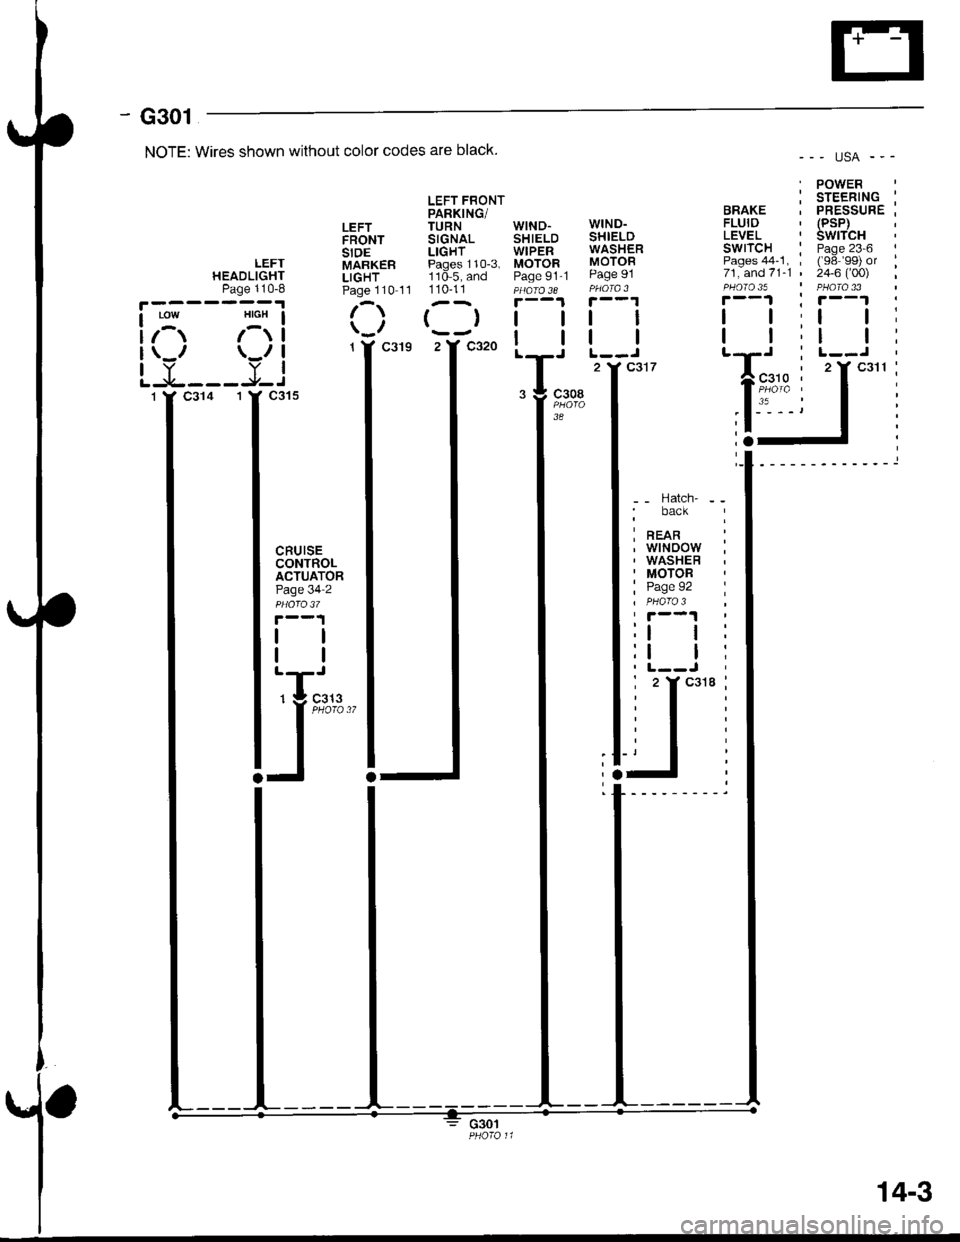 HONDA INTEGRA 1998 4.G Owners Guide - G301
NOTE: Wires shown without color codes are black.
LEFT FBONTPARKING/LEFT TURN WIND.FRONT SIGNAL SHIELDSIDE LIGHT WIPER
()l
2Y c320 |
--- usA ---
. POWERi sreentlc :BRAKE . PRESSURE ;FLUID  (PsP